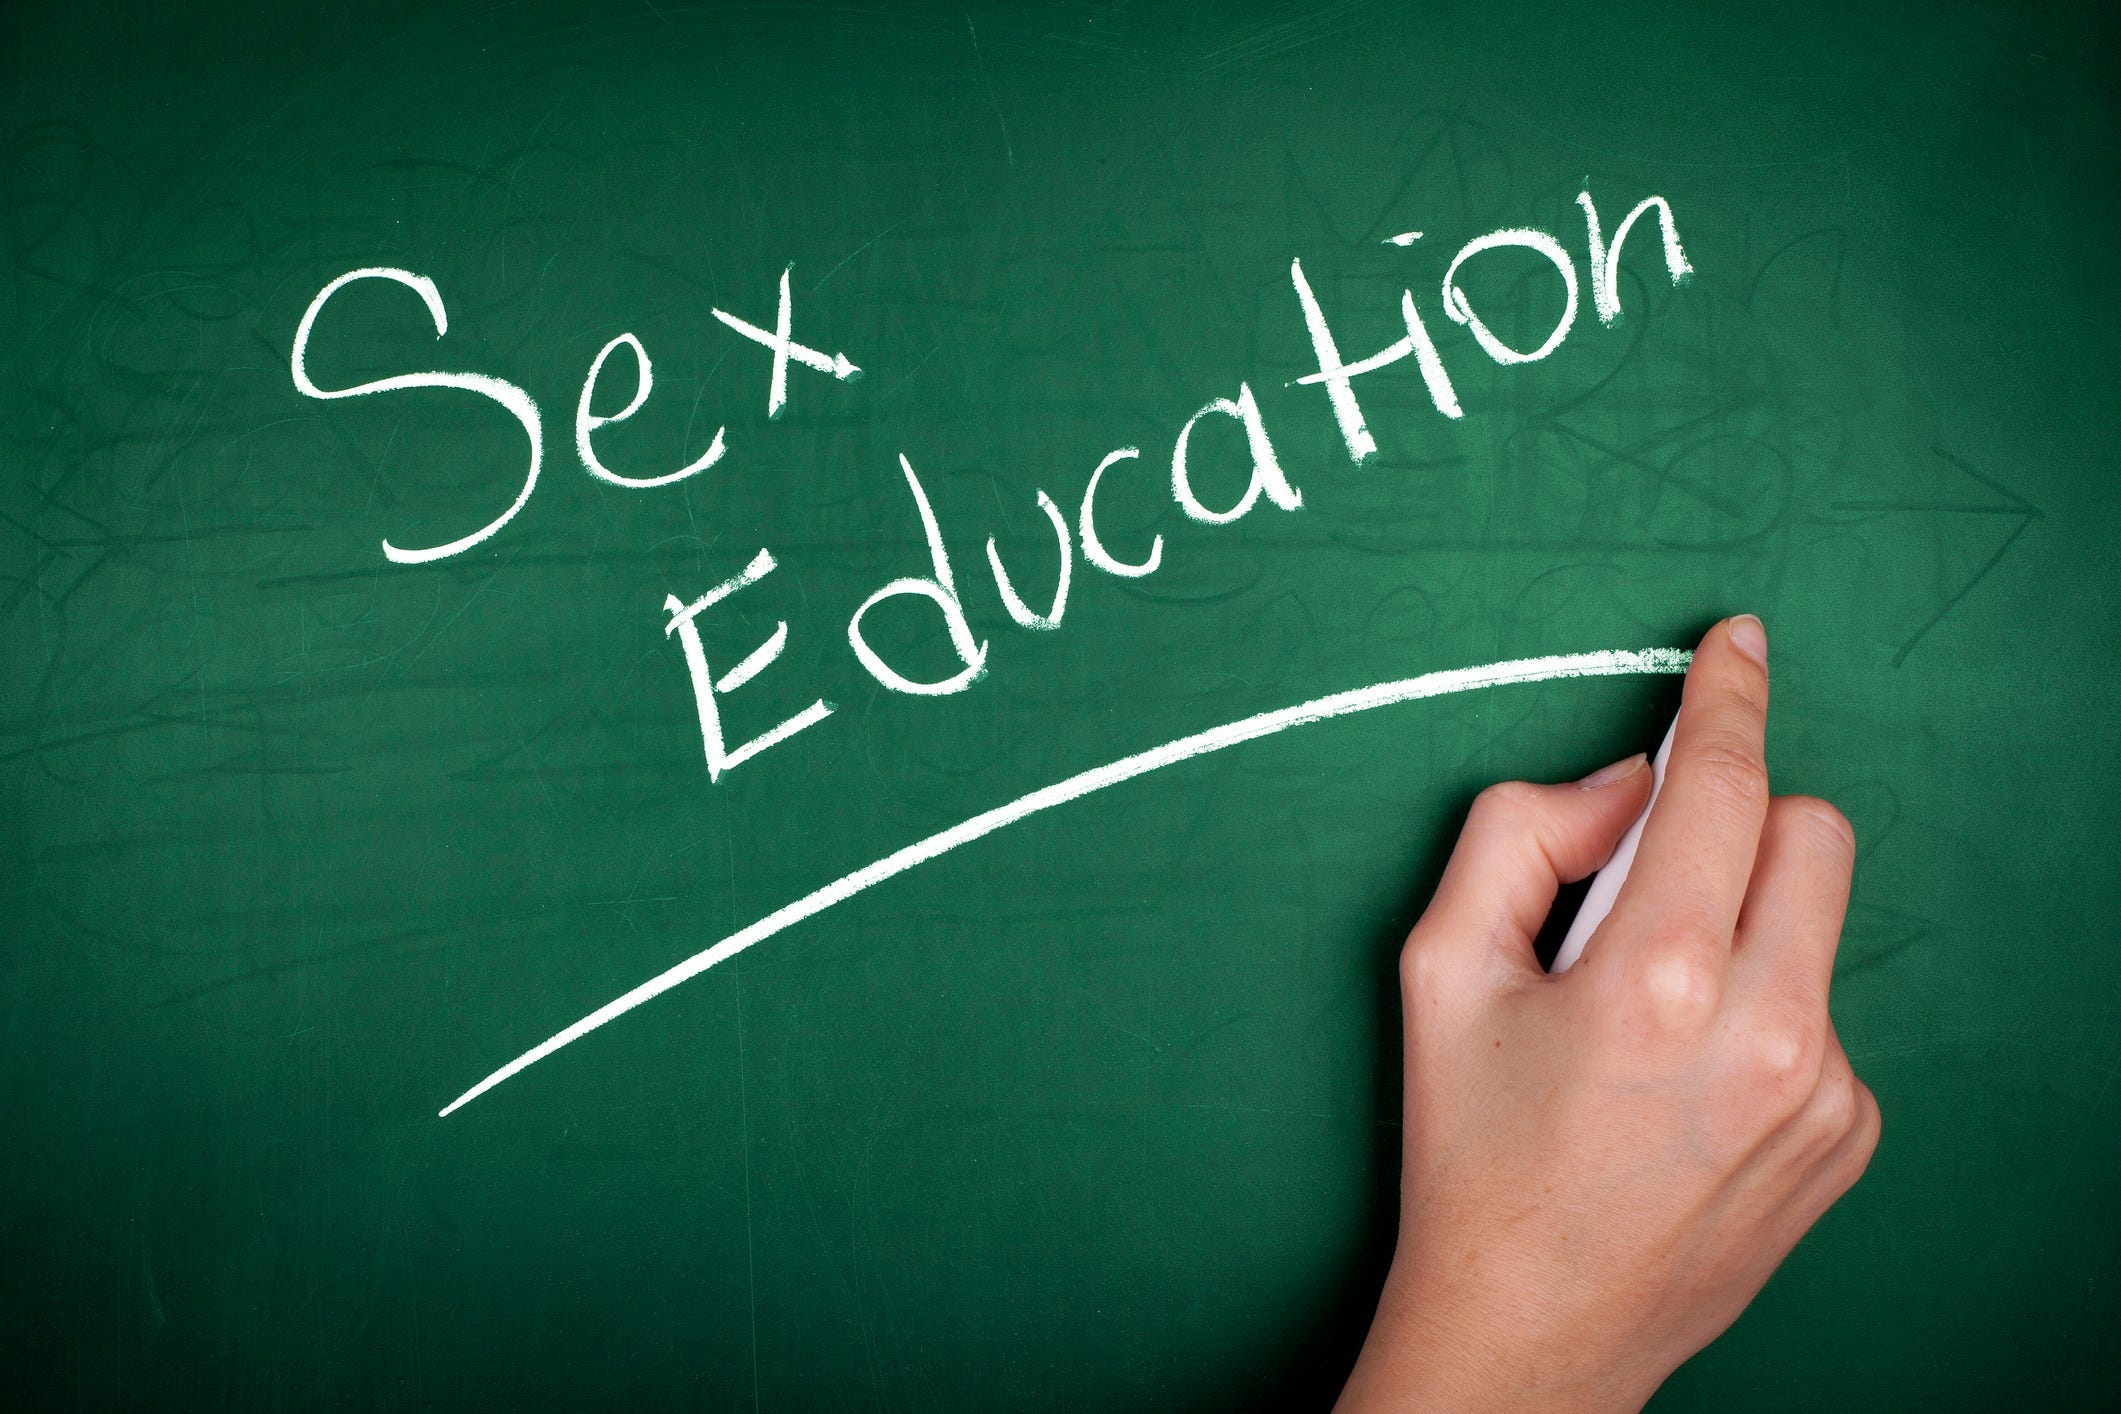 Sex education dominates start of Arizona legislative session at Capitol